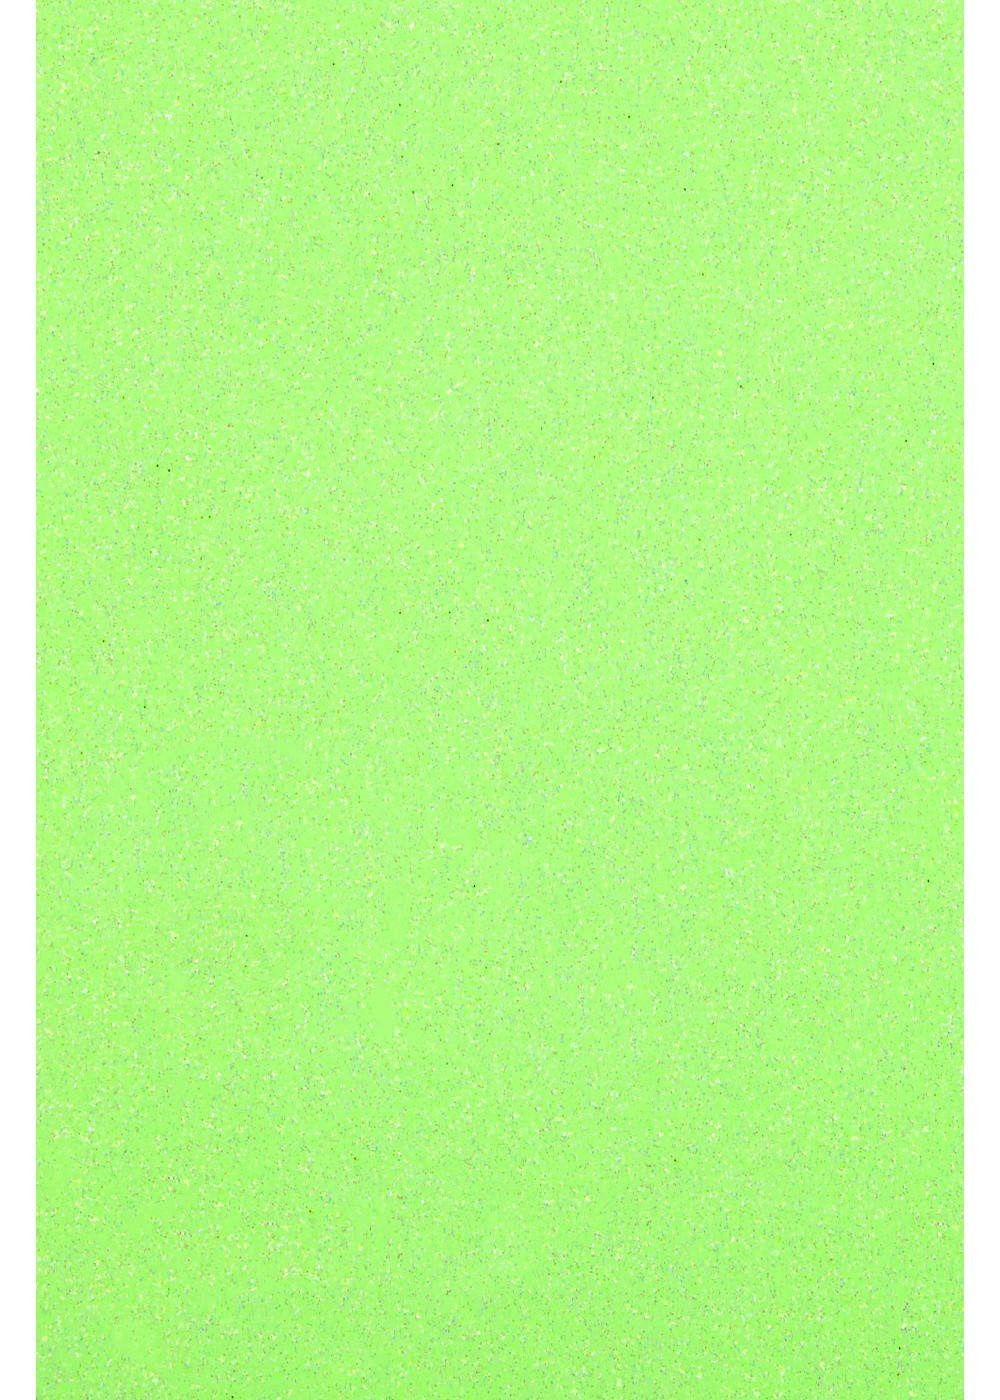 Hilltop Transparentpapier Glitzer perfekt zum Plottern Transferfolie/Textilfolie Green zum Neon Aufbügeln